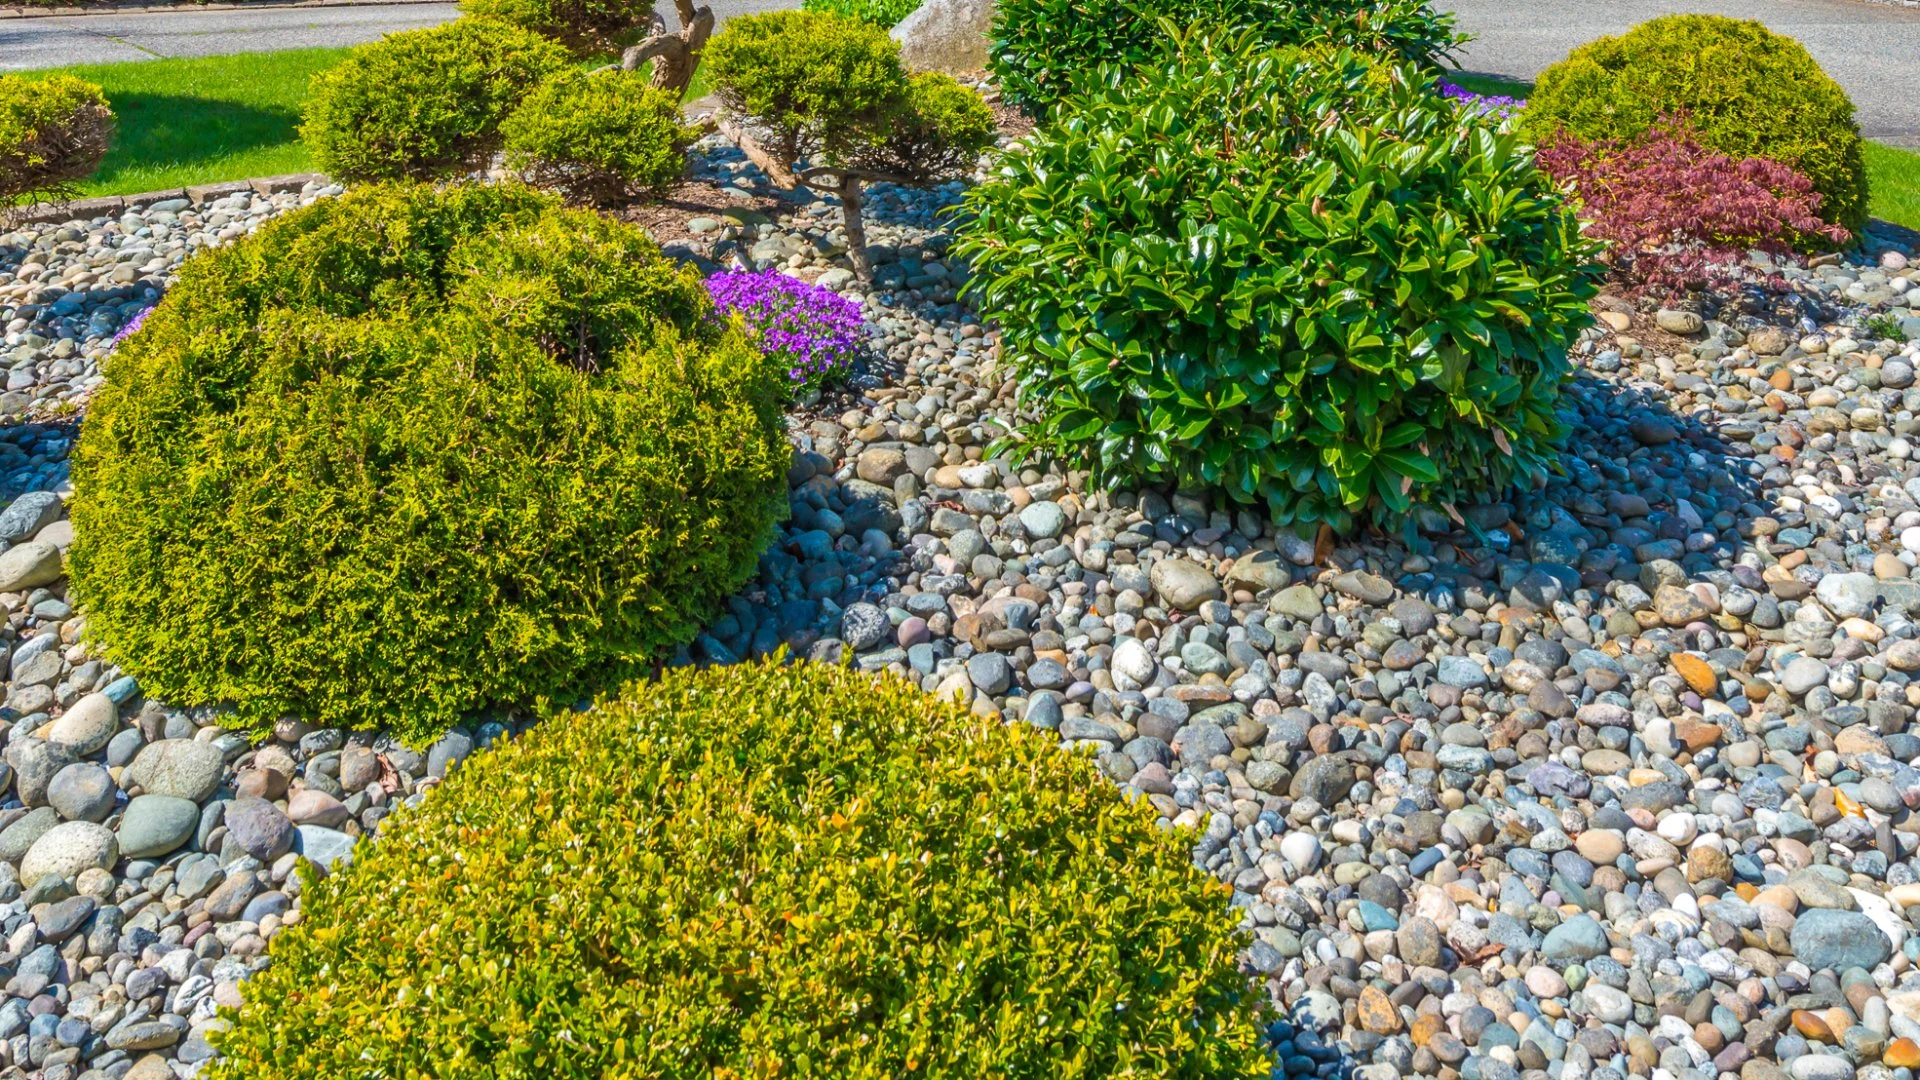 A beautiful landscape bed of shrubs and rocks in La Vista, NE.